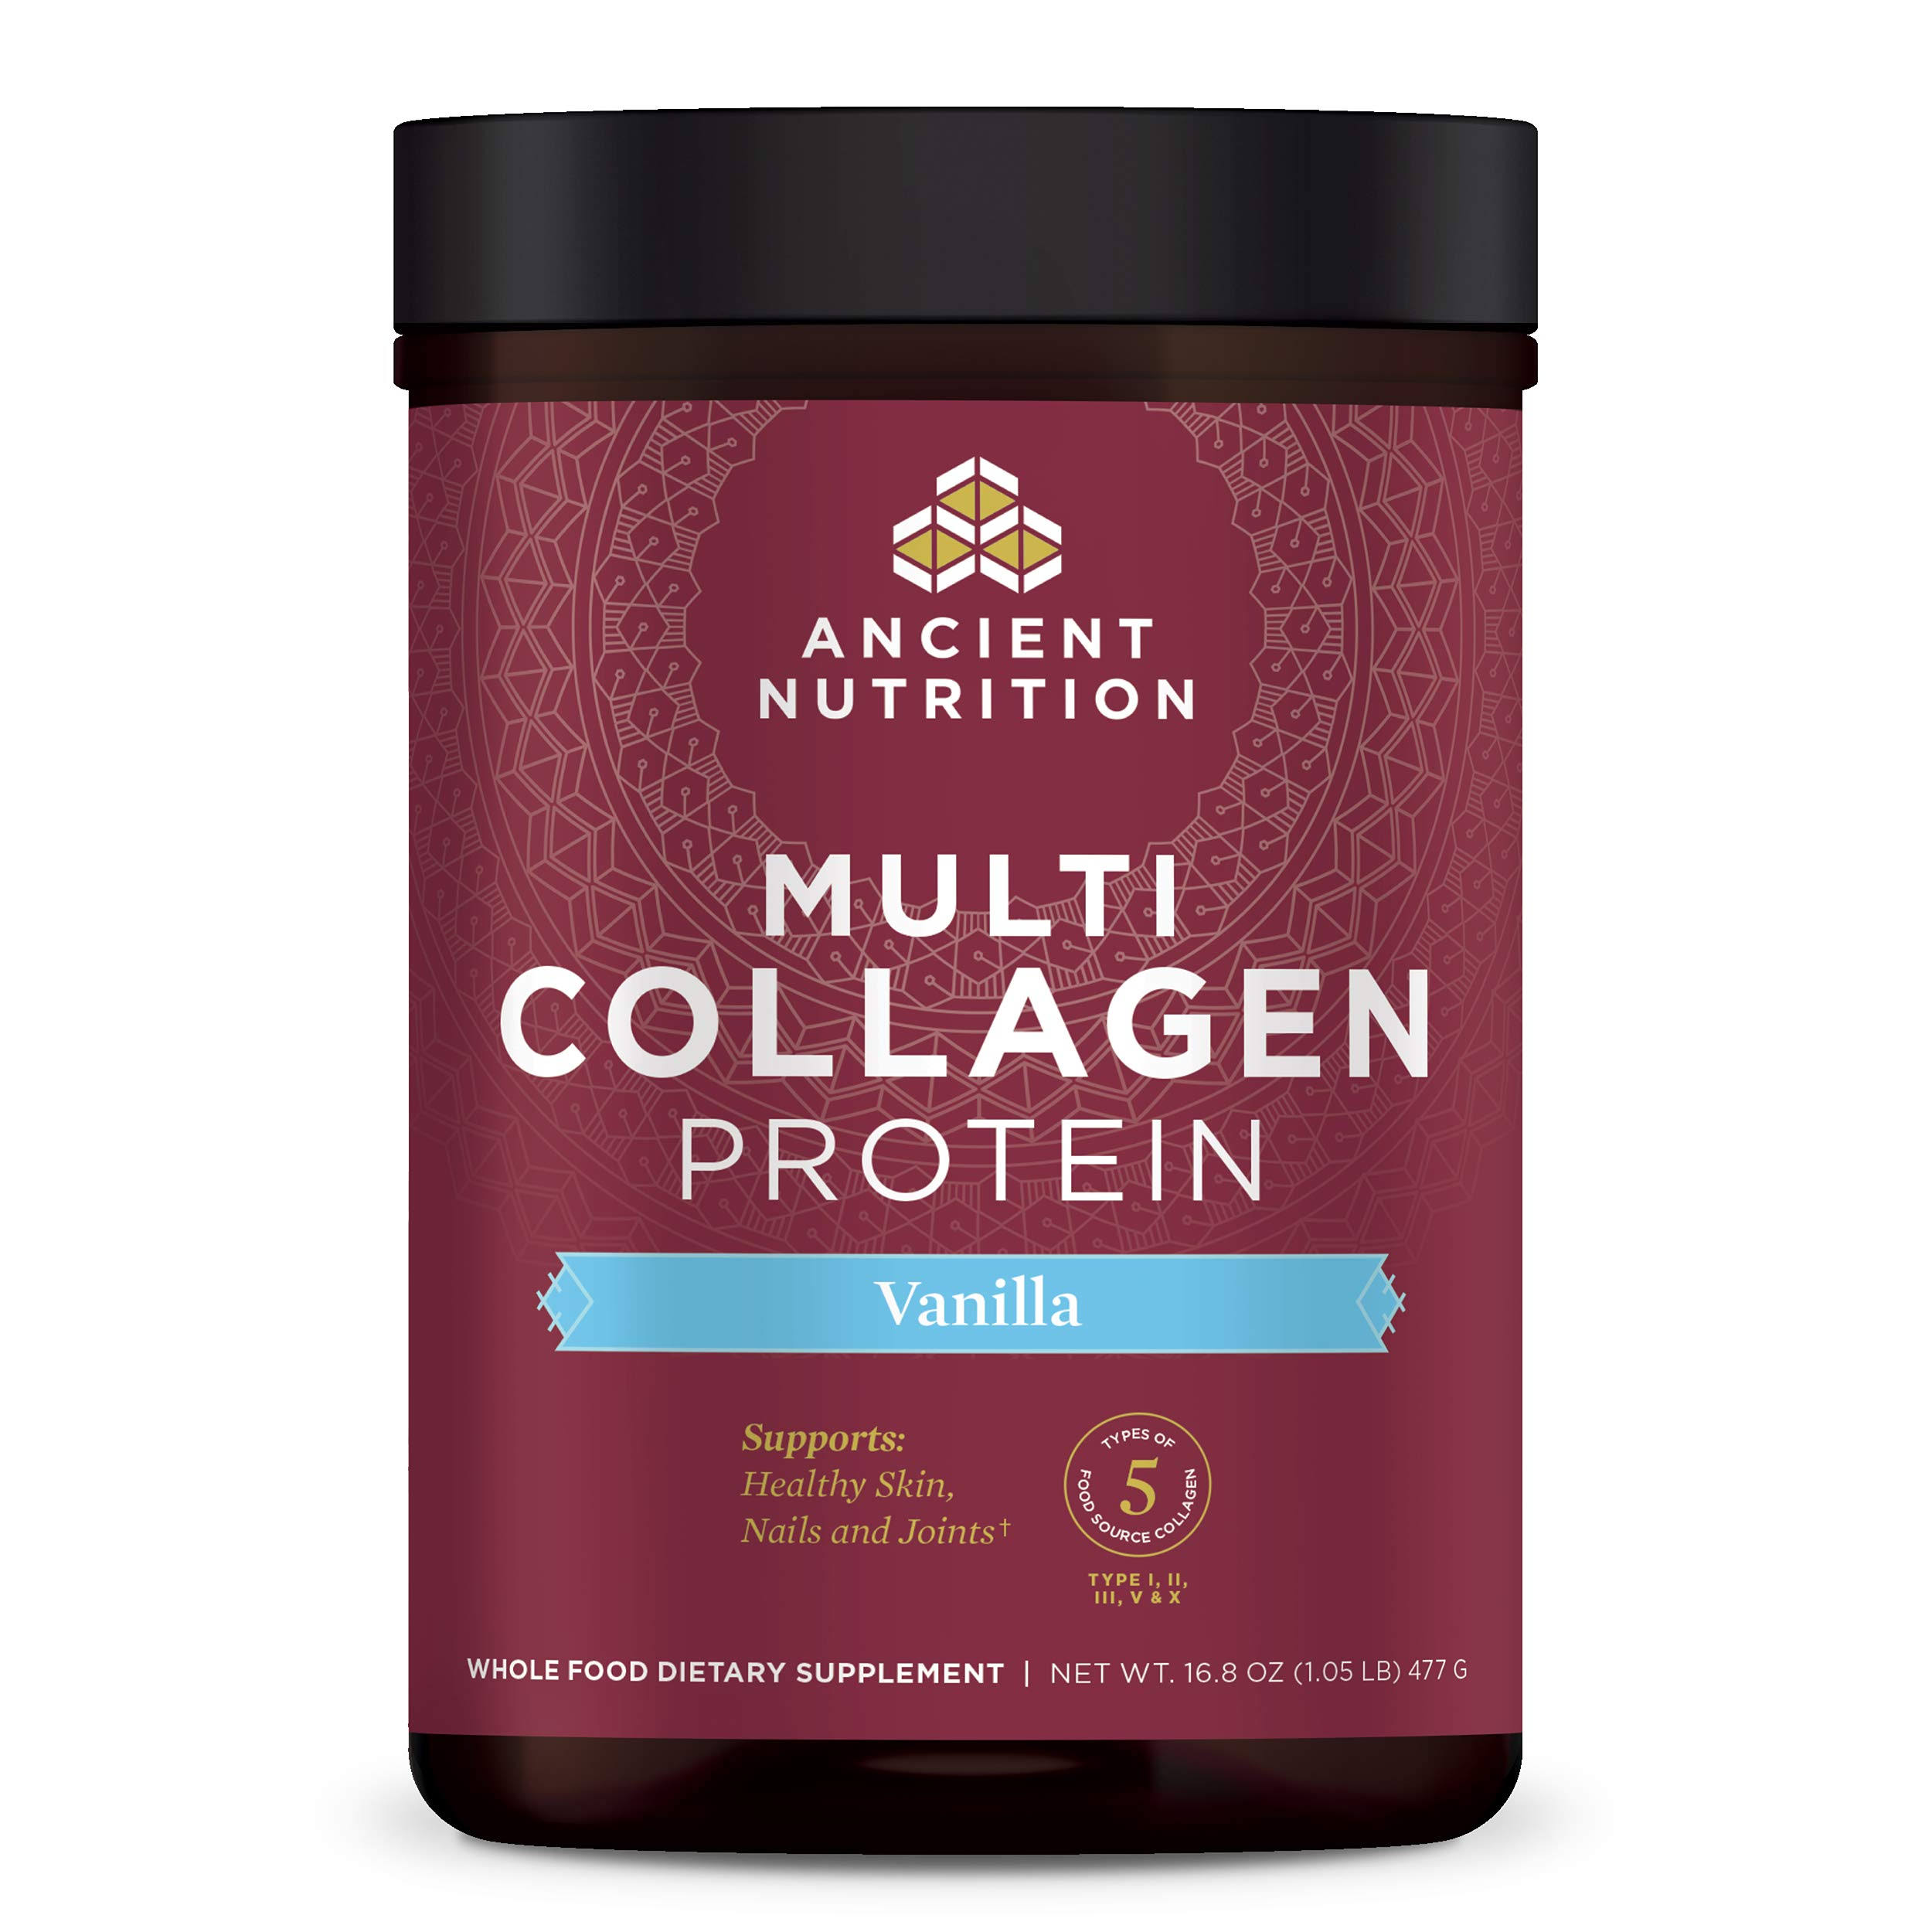 Ancient Nutrition Multi Collagen Protein, Vanilla - 9 oz